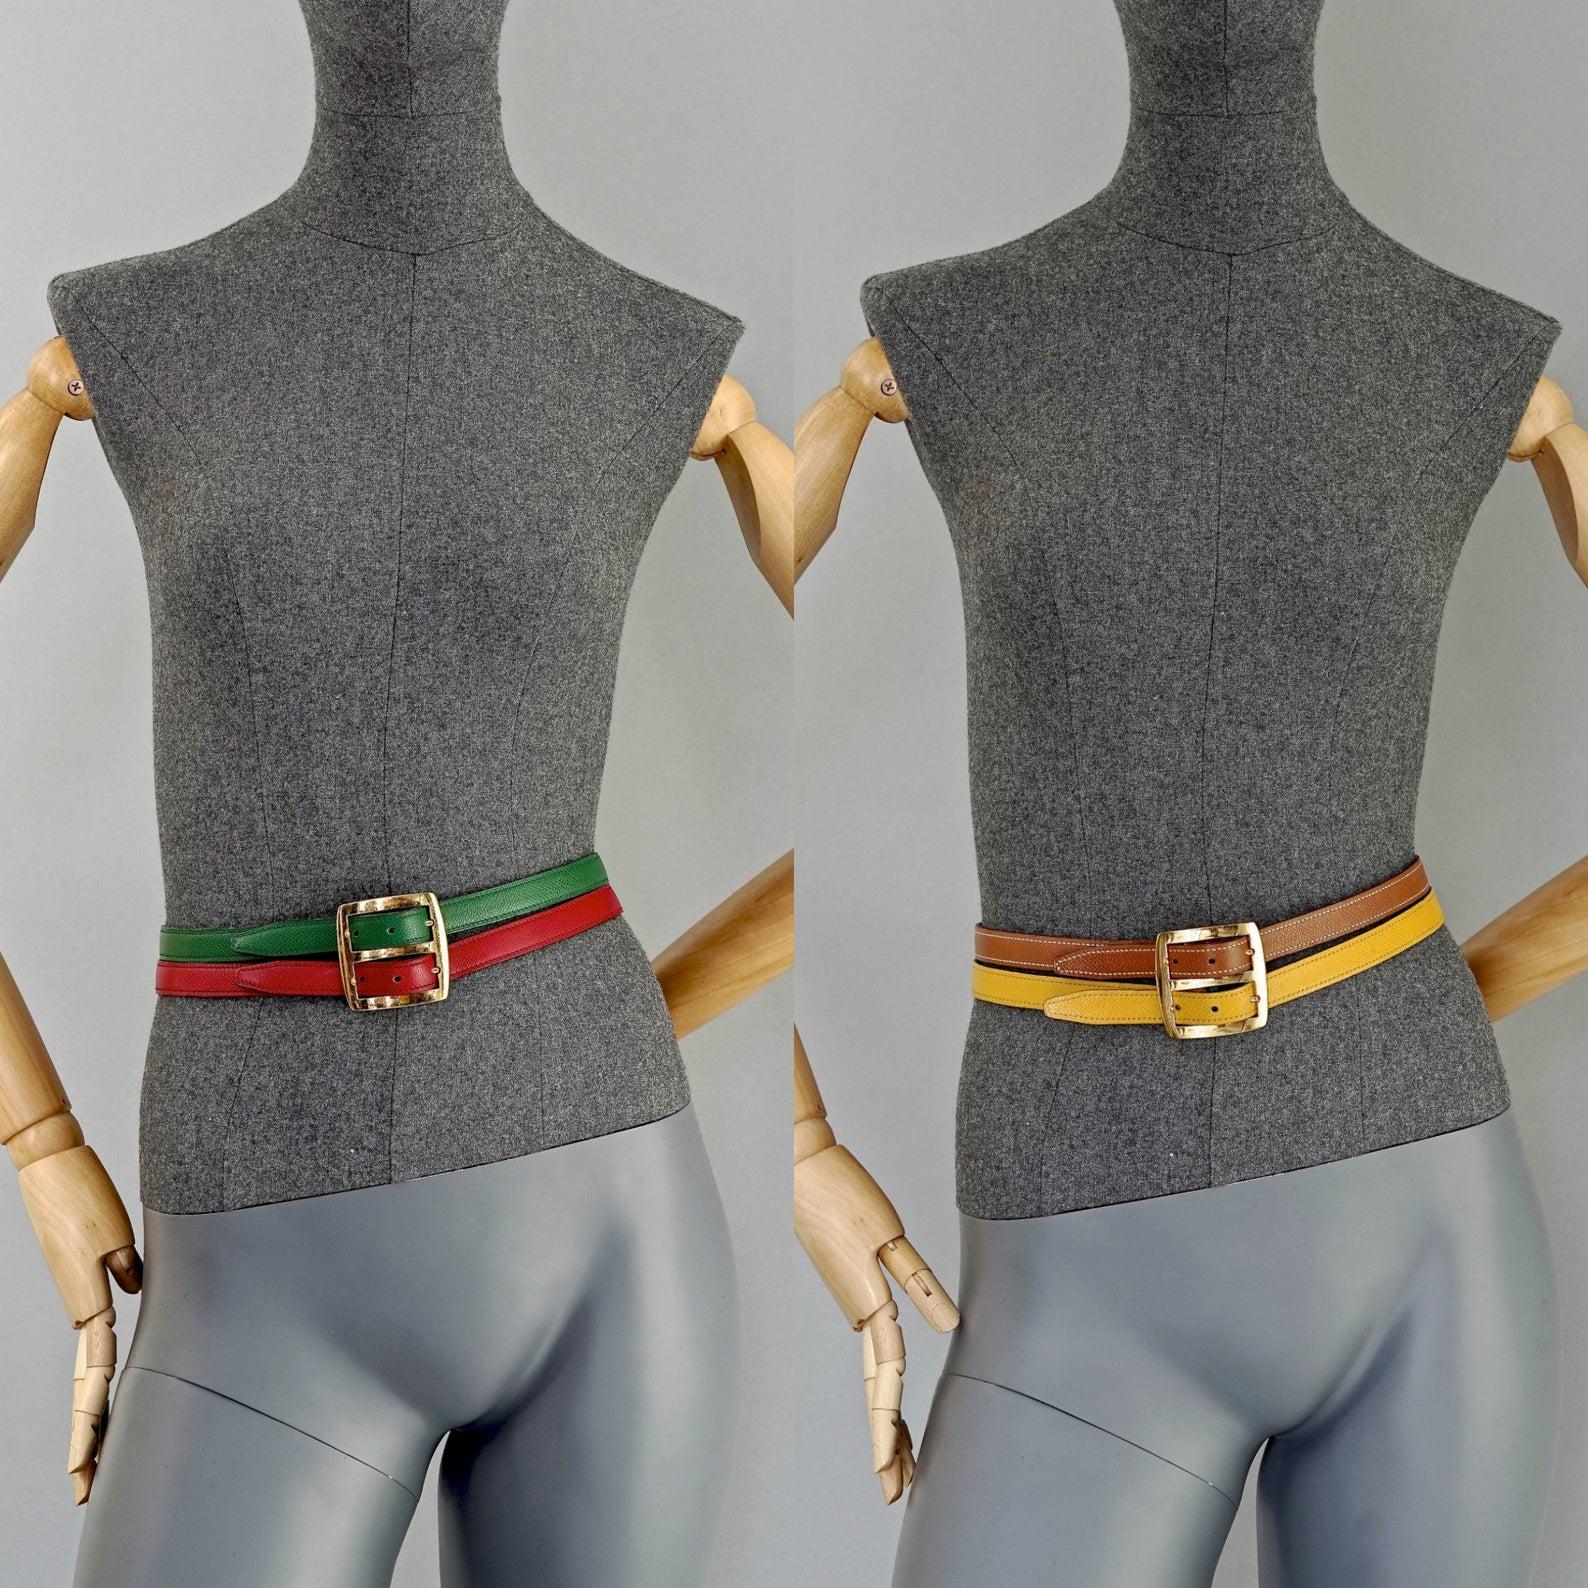 Vintage HERMES Reversible Pop Color Double Strap Belt

Measurements:
Buckle Height: 2.16 inches (5.5 cm)
Wearable Length: 27.55 inches, 28.34 inches, 29.13 inches (70 cm, 72 cm, 74 cm)
Total Length: 31.88 inches (81 cm)

Features:
- 100% Authentic